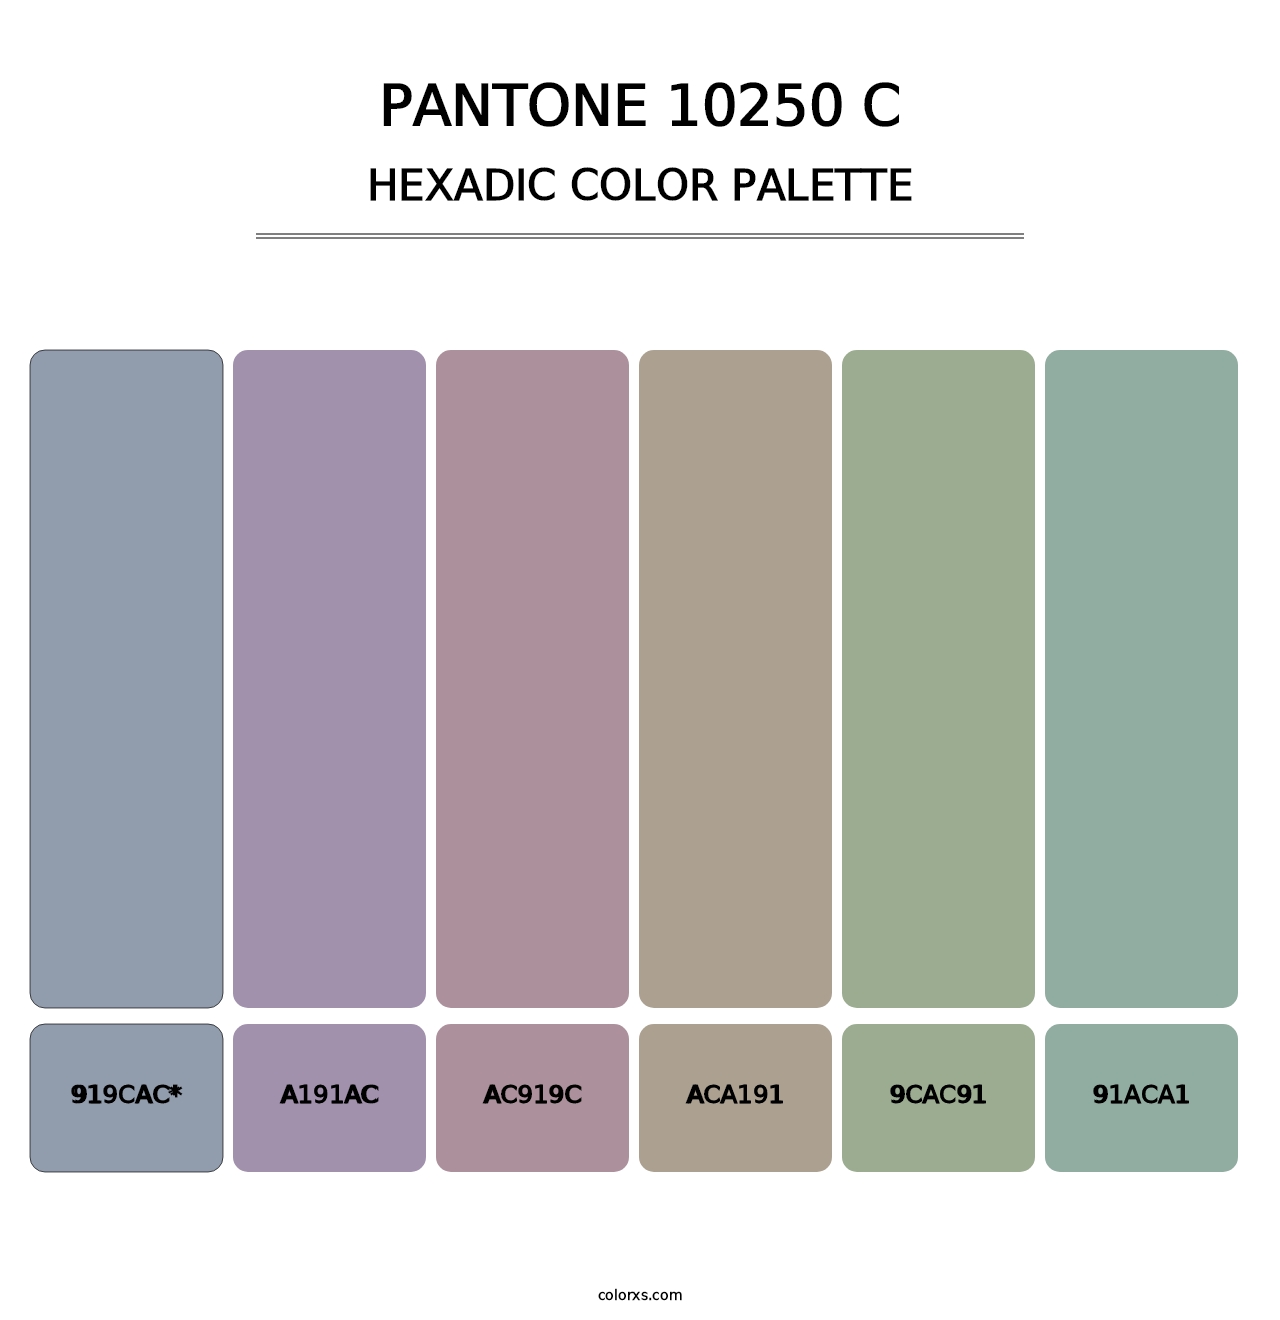 PANTONE 10250 C - Hexadic Color Palette